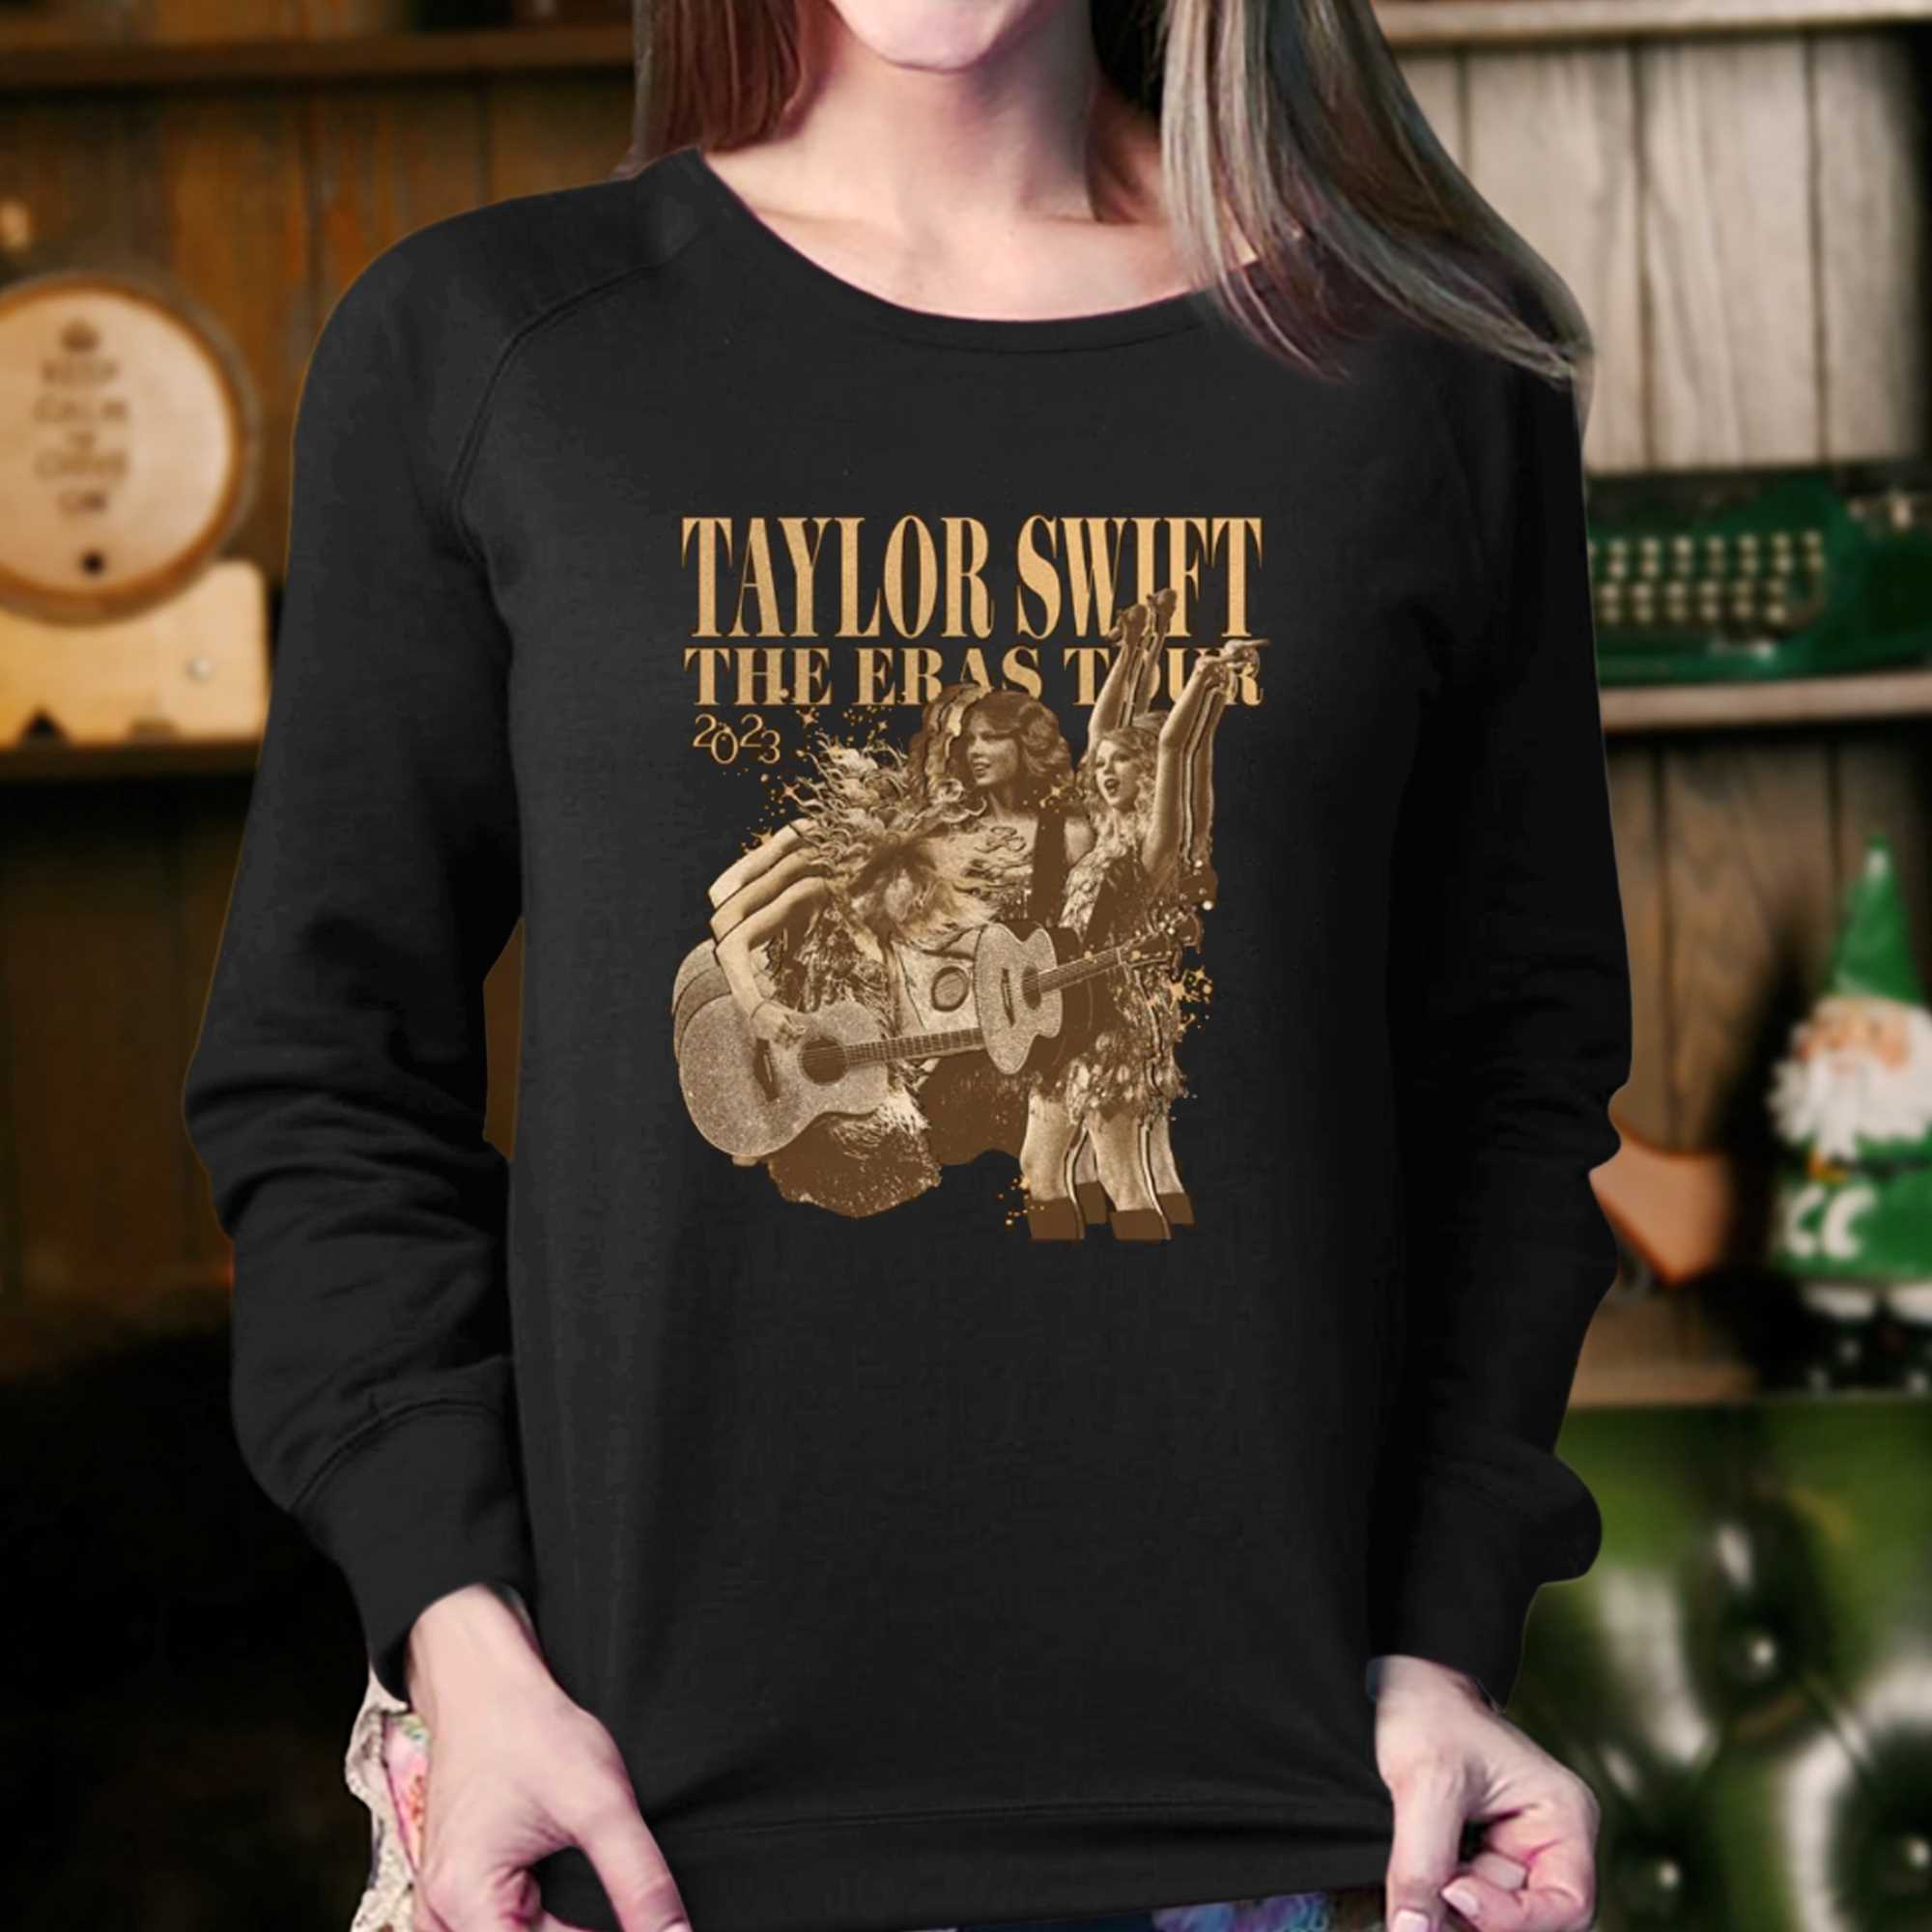 Taylor Swift The Eras Tour 2023 T-shirt 